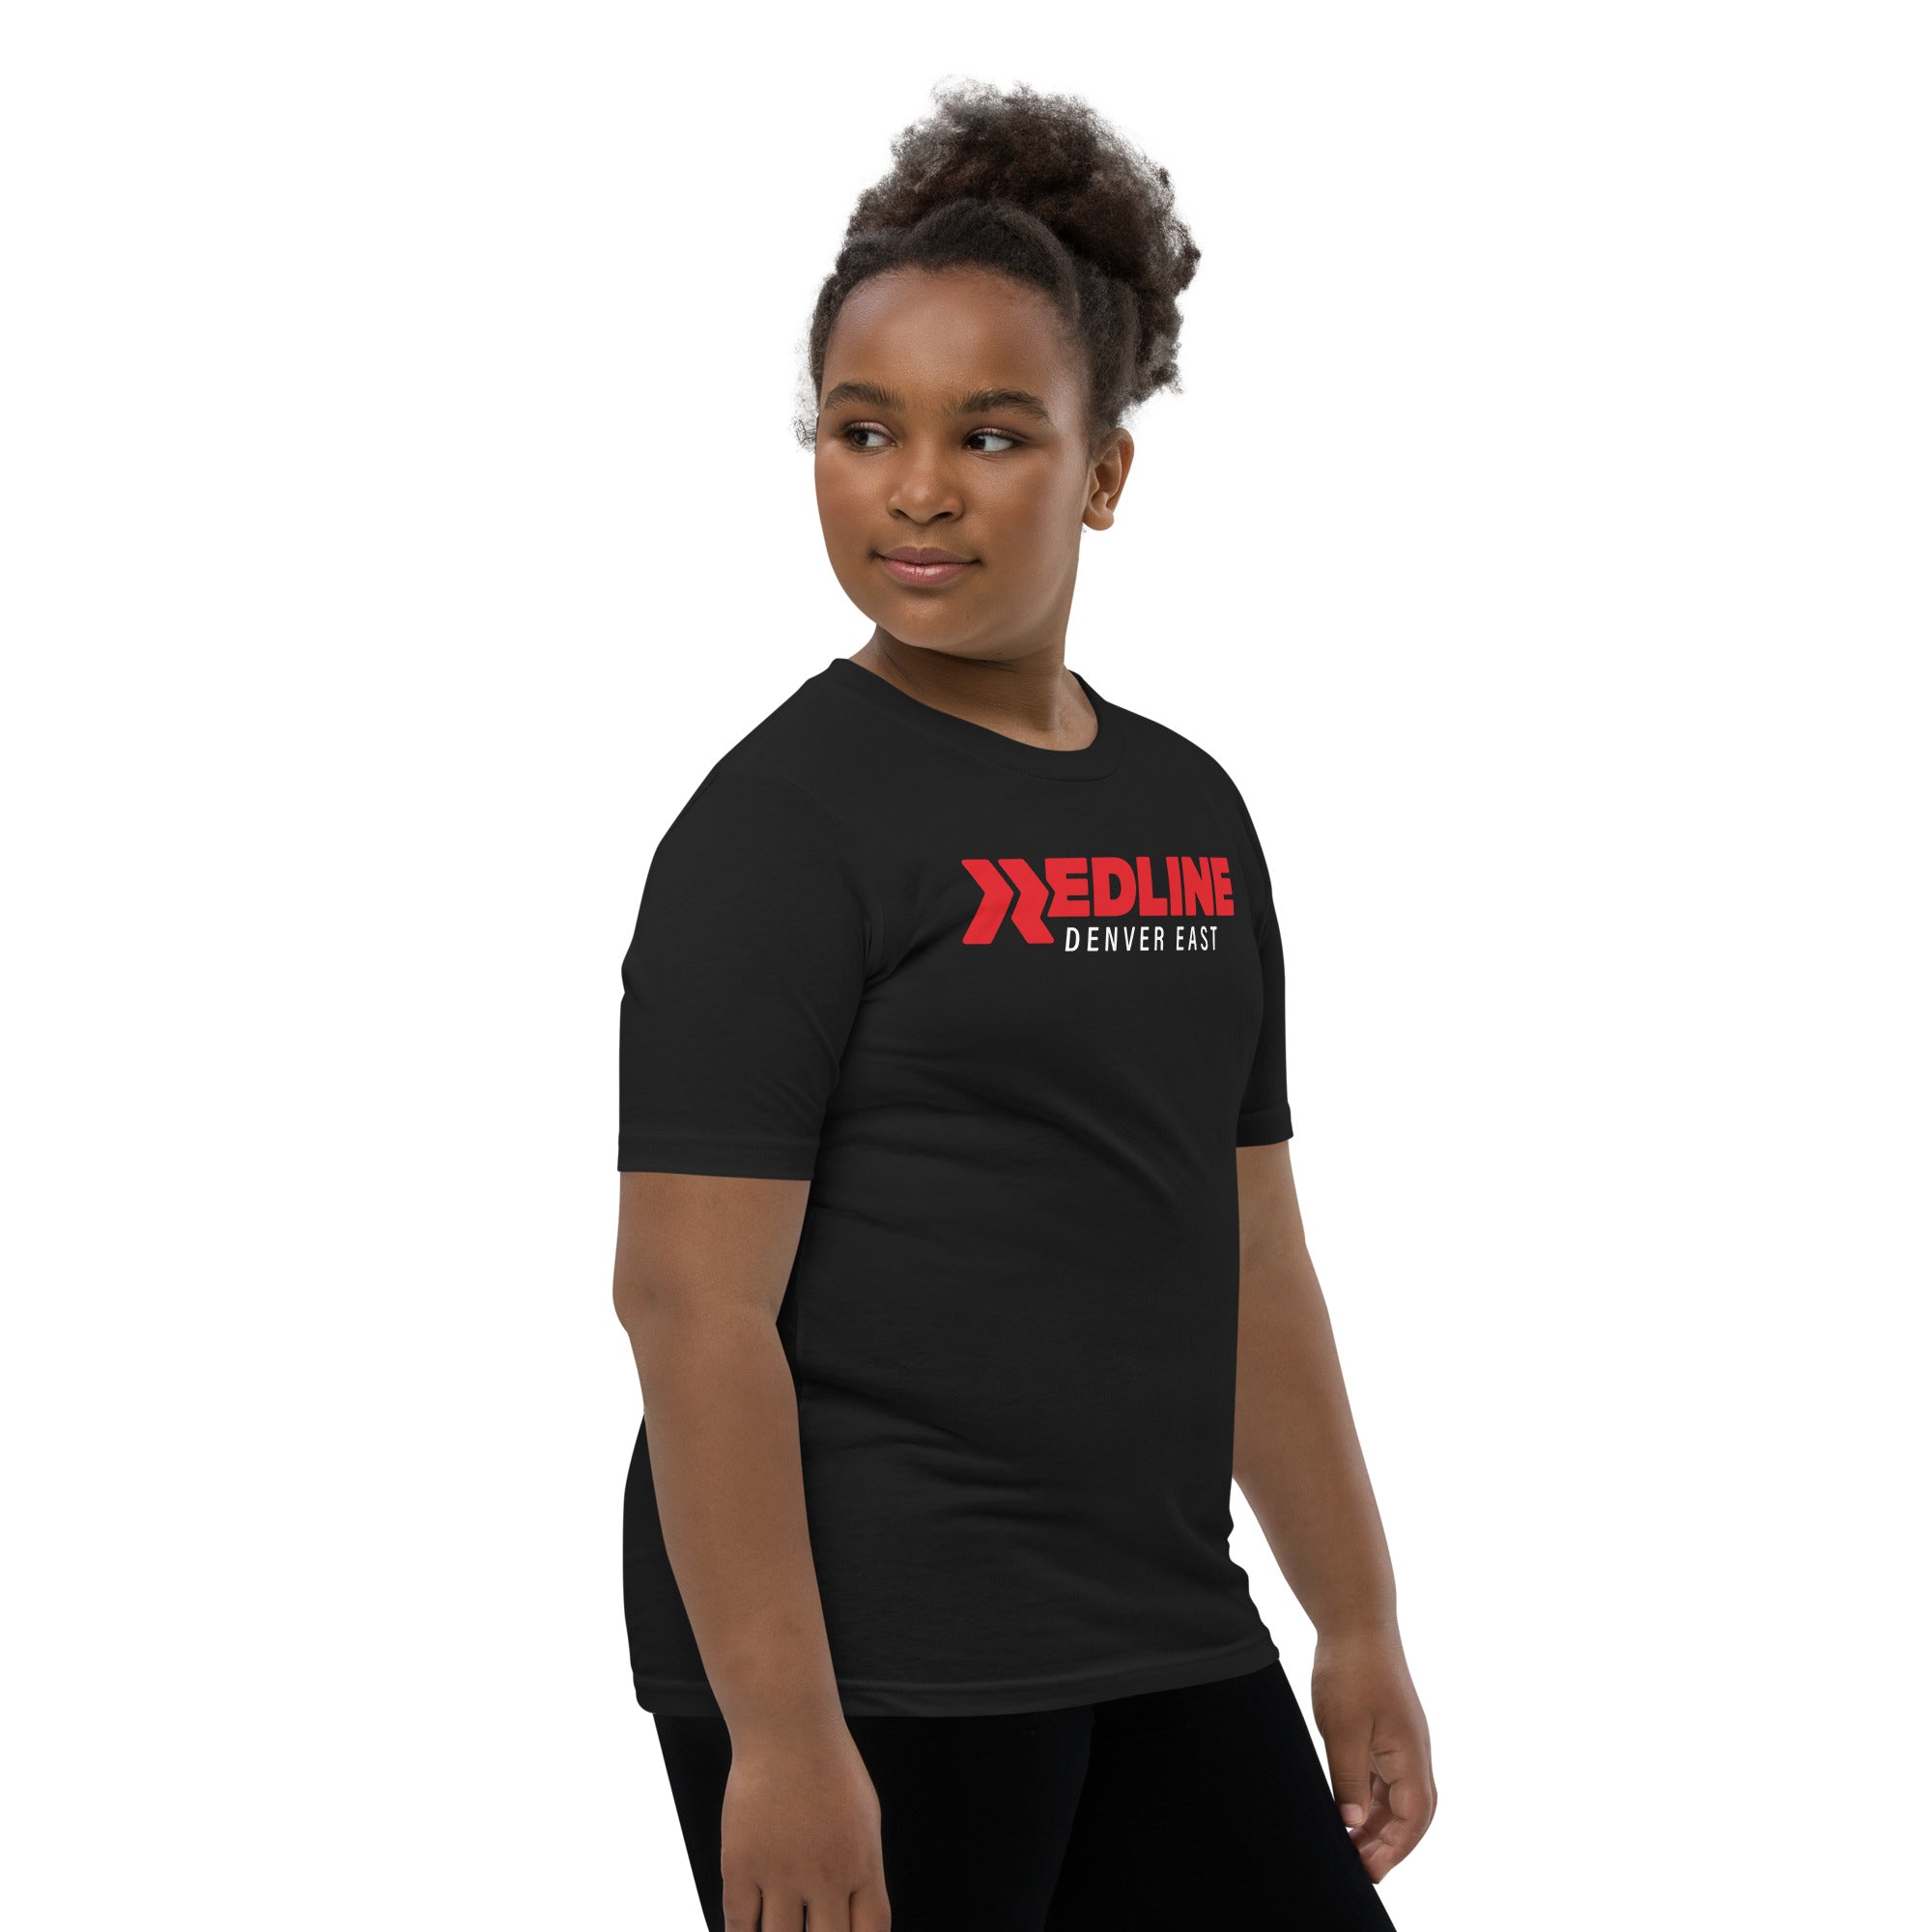 Denver East Logo R/W - Black Youth Short Sleeve T-Shirt